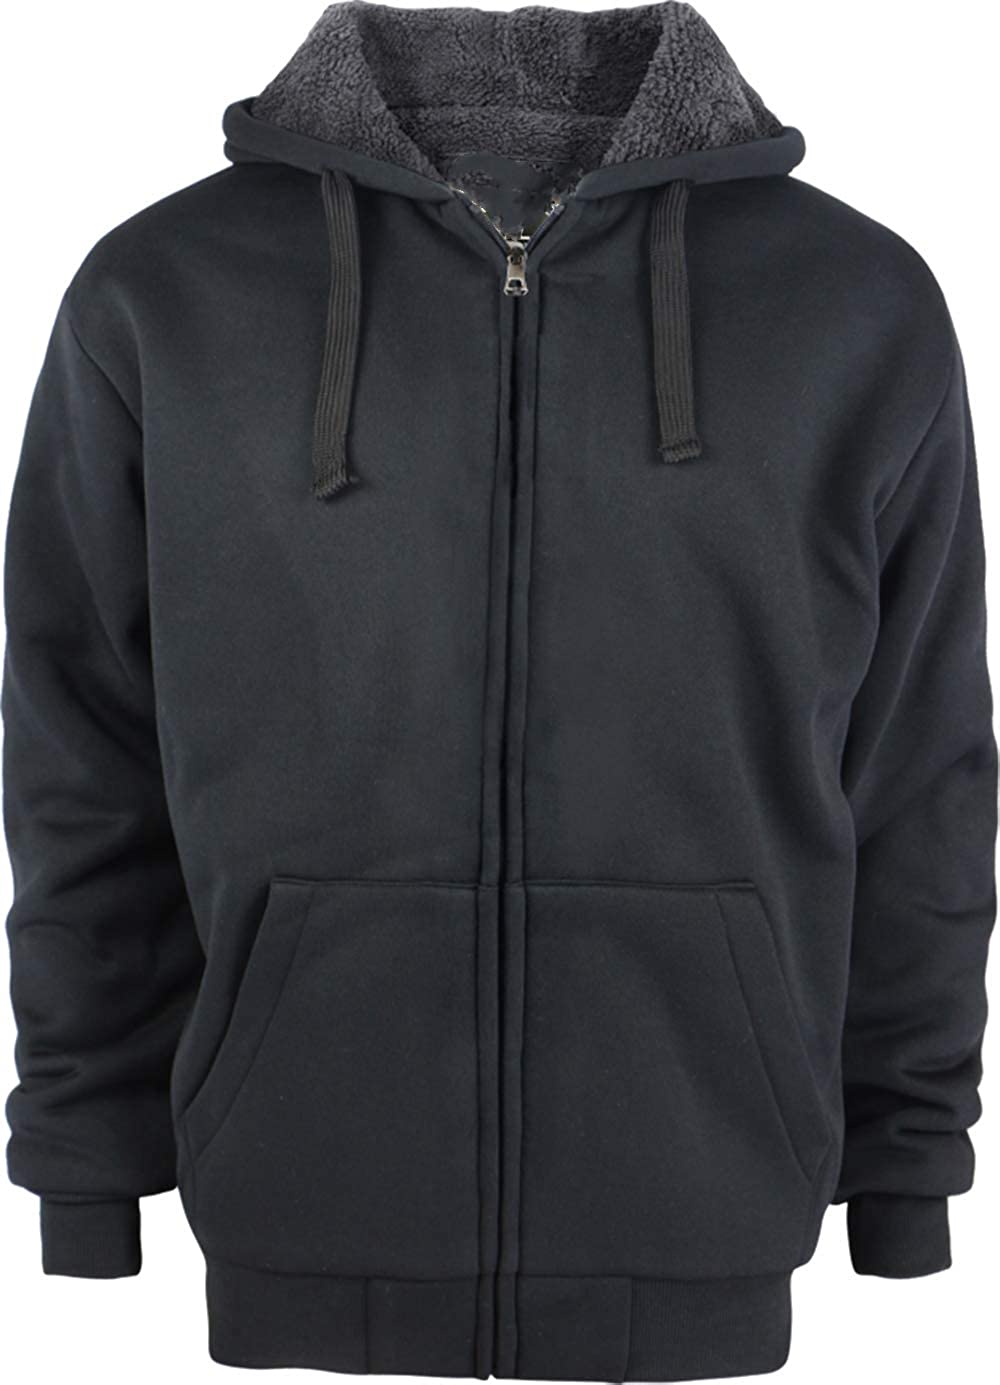 Men's Hoodies Full Zip Sherpa Lined Heavyweight Fleece Warm Sweatshirts Big Tall